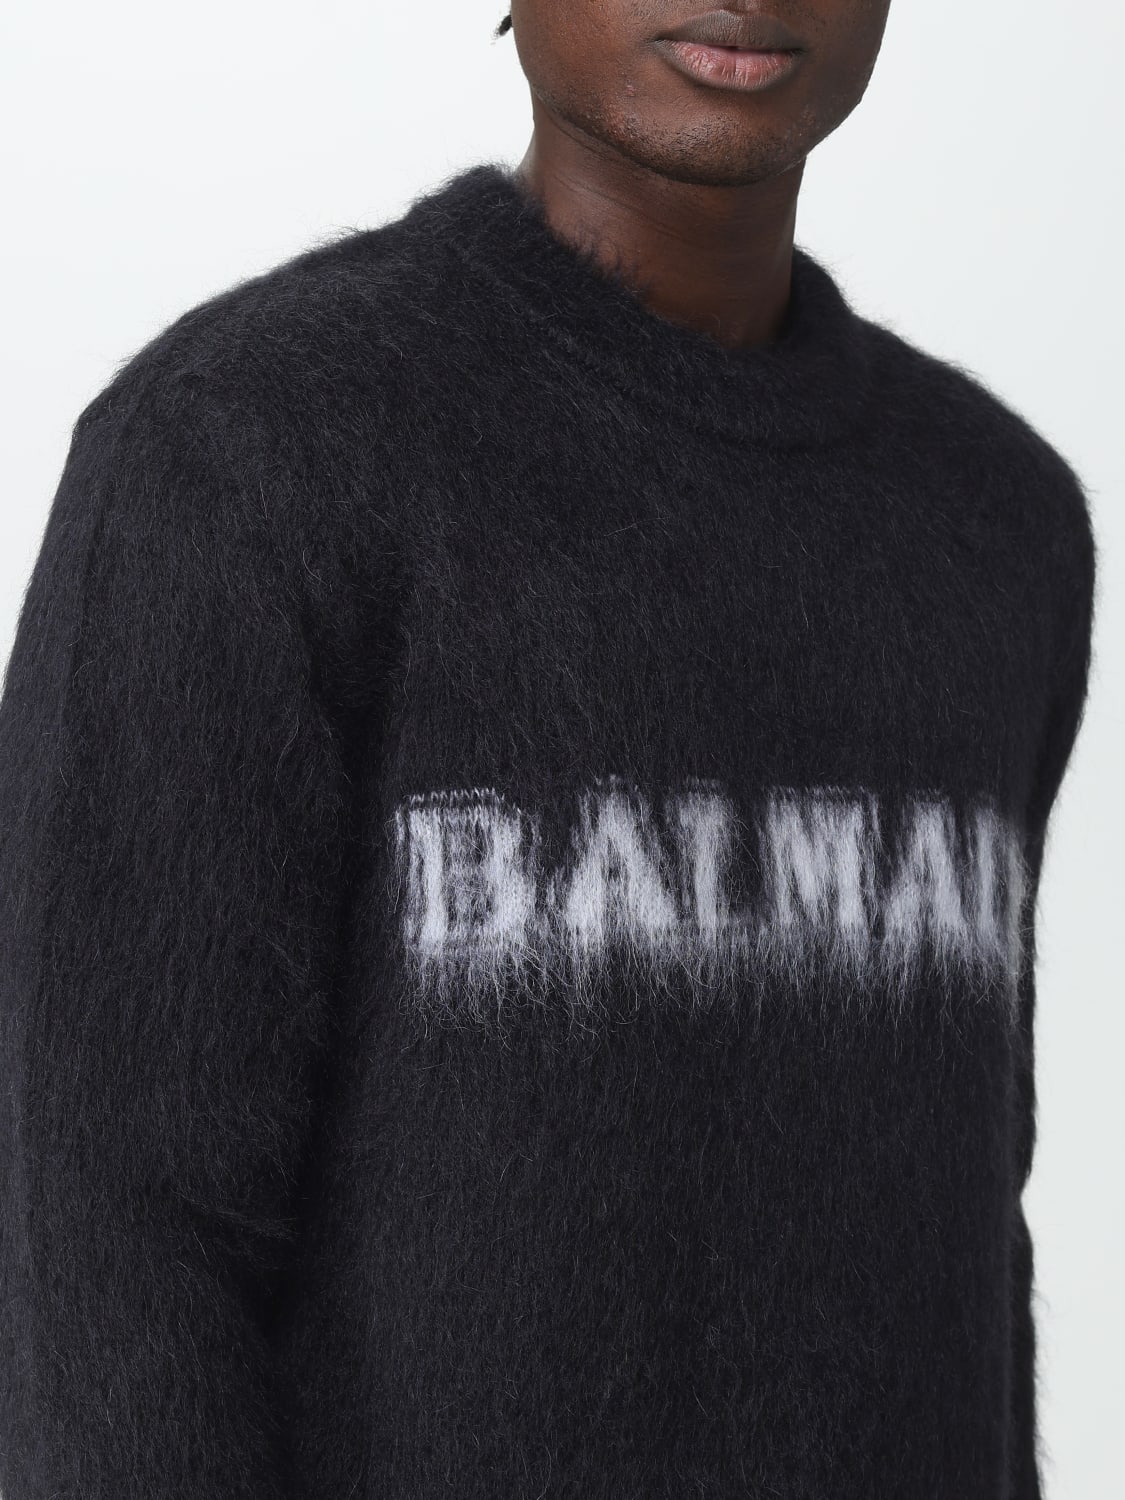 BALMAIN: sweater for man - Black | Balmain sweater BH0KD000KF38 online ...